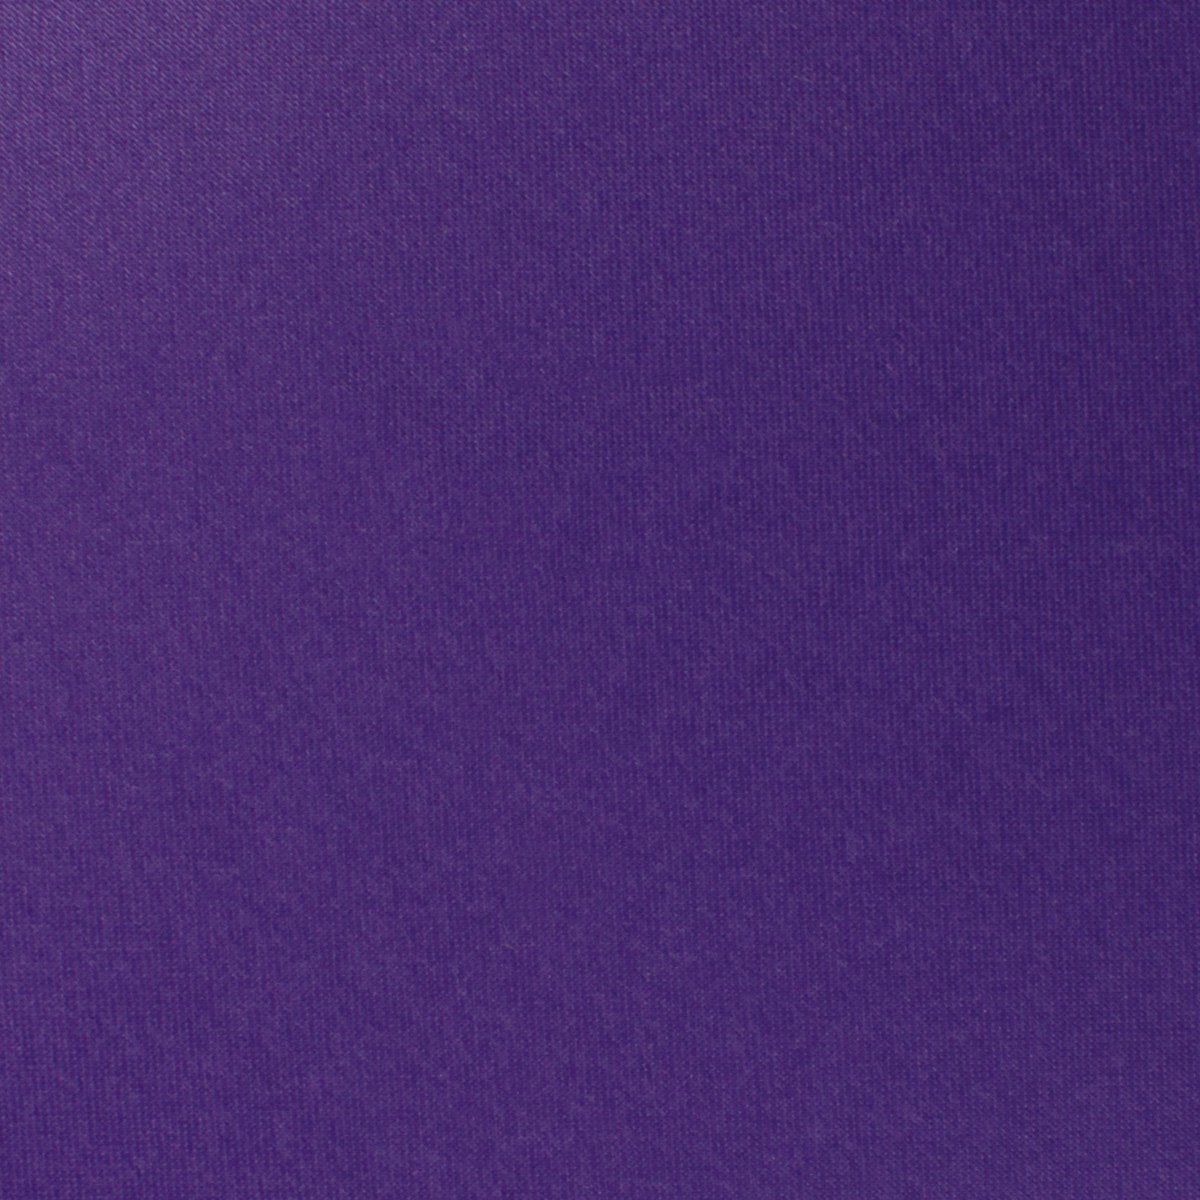 Royal Violet Purple Satin Pocket Square Fabric